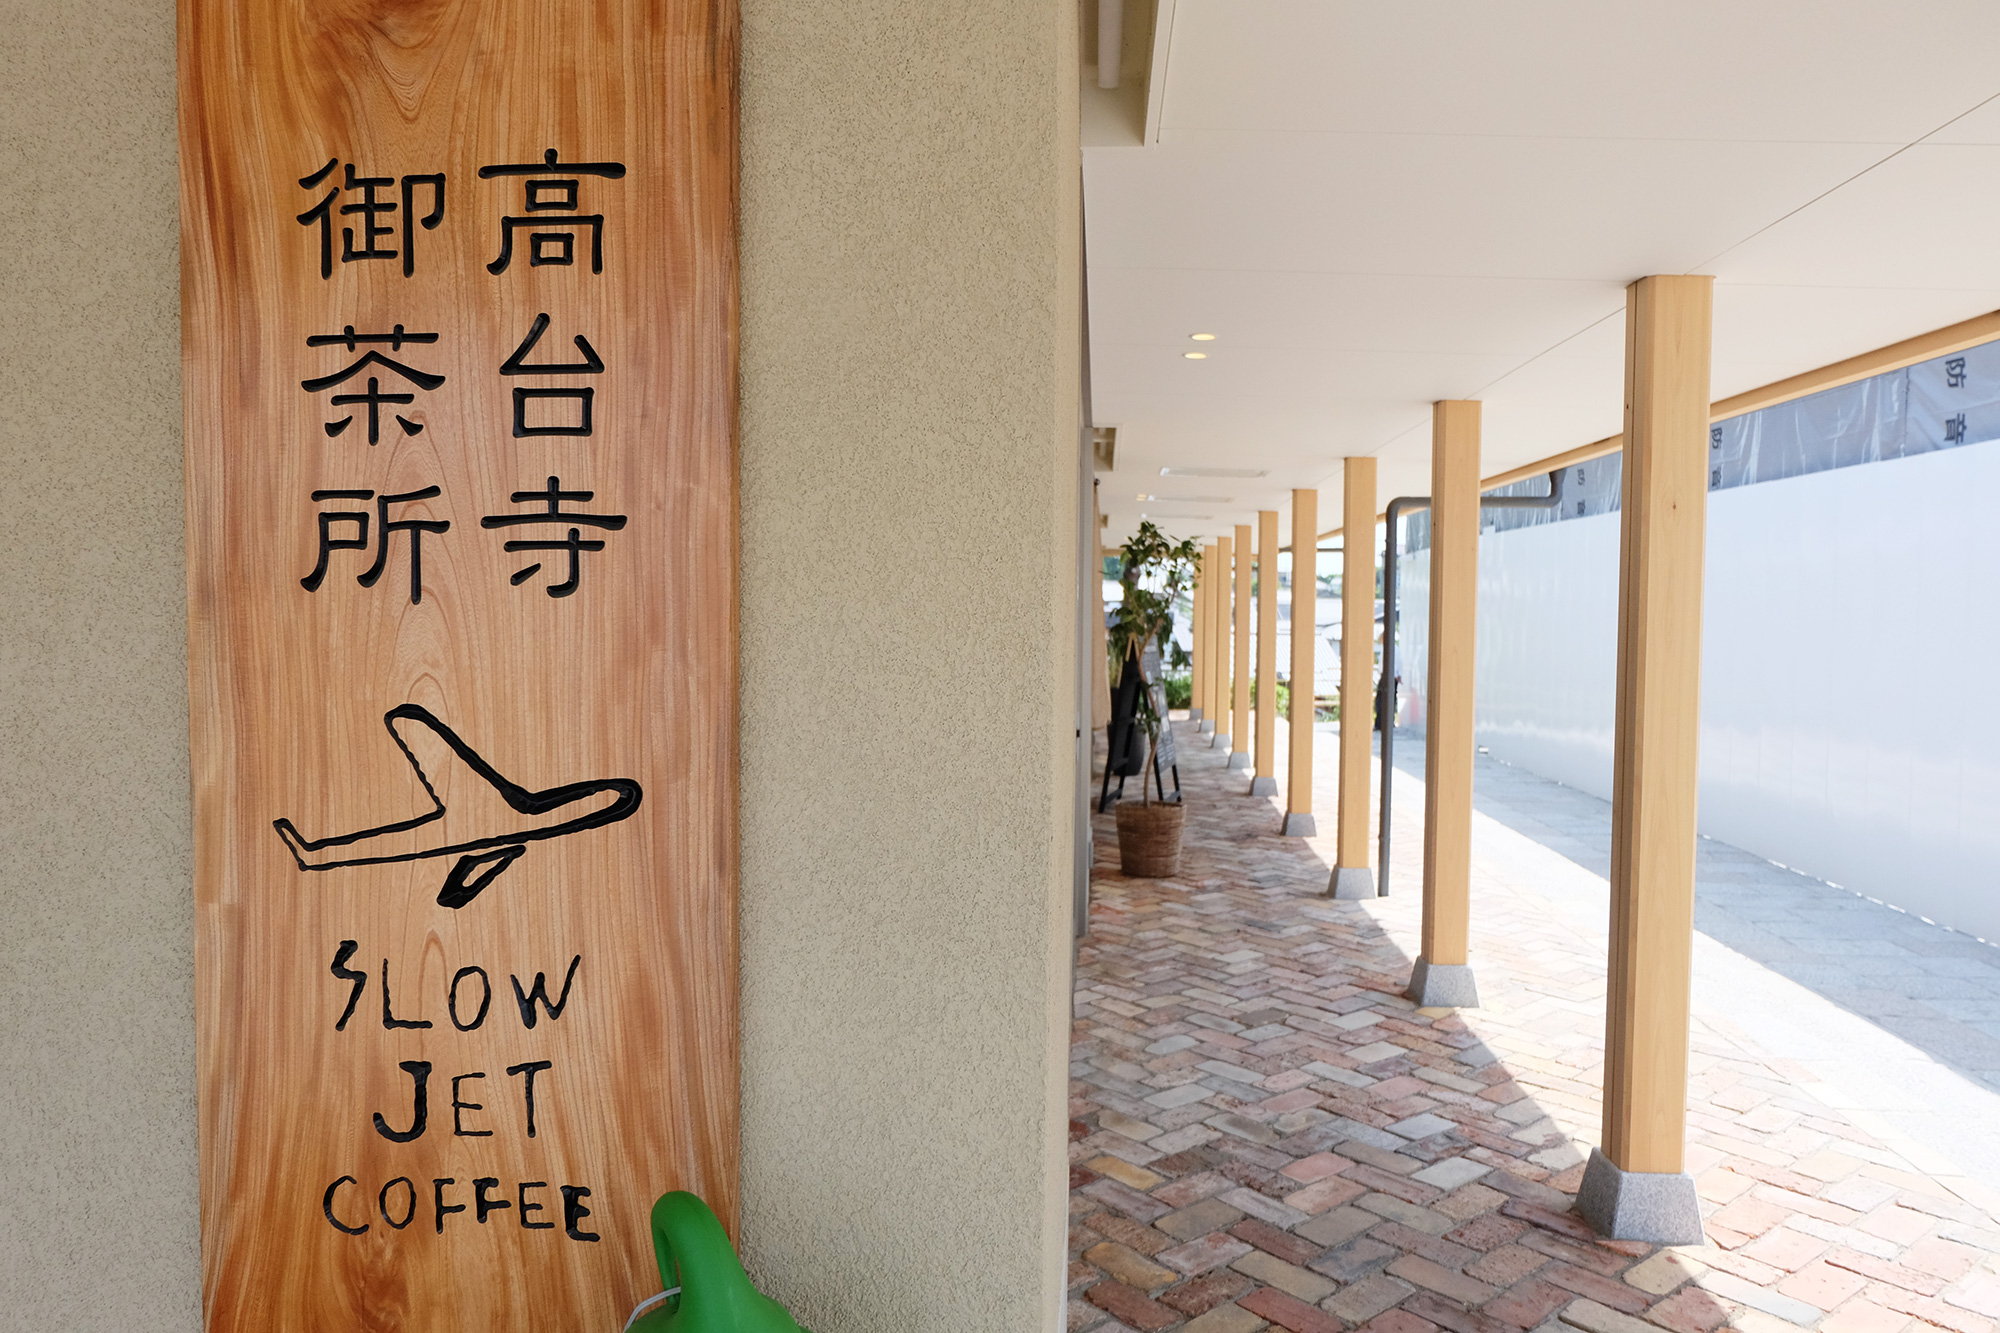 SLOW JET COFFEE 高台寺 スロージェットコーヒー